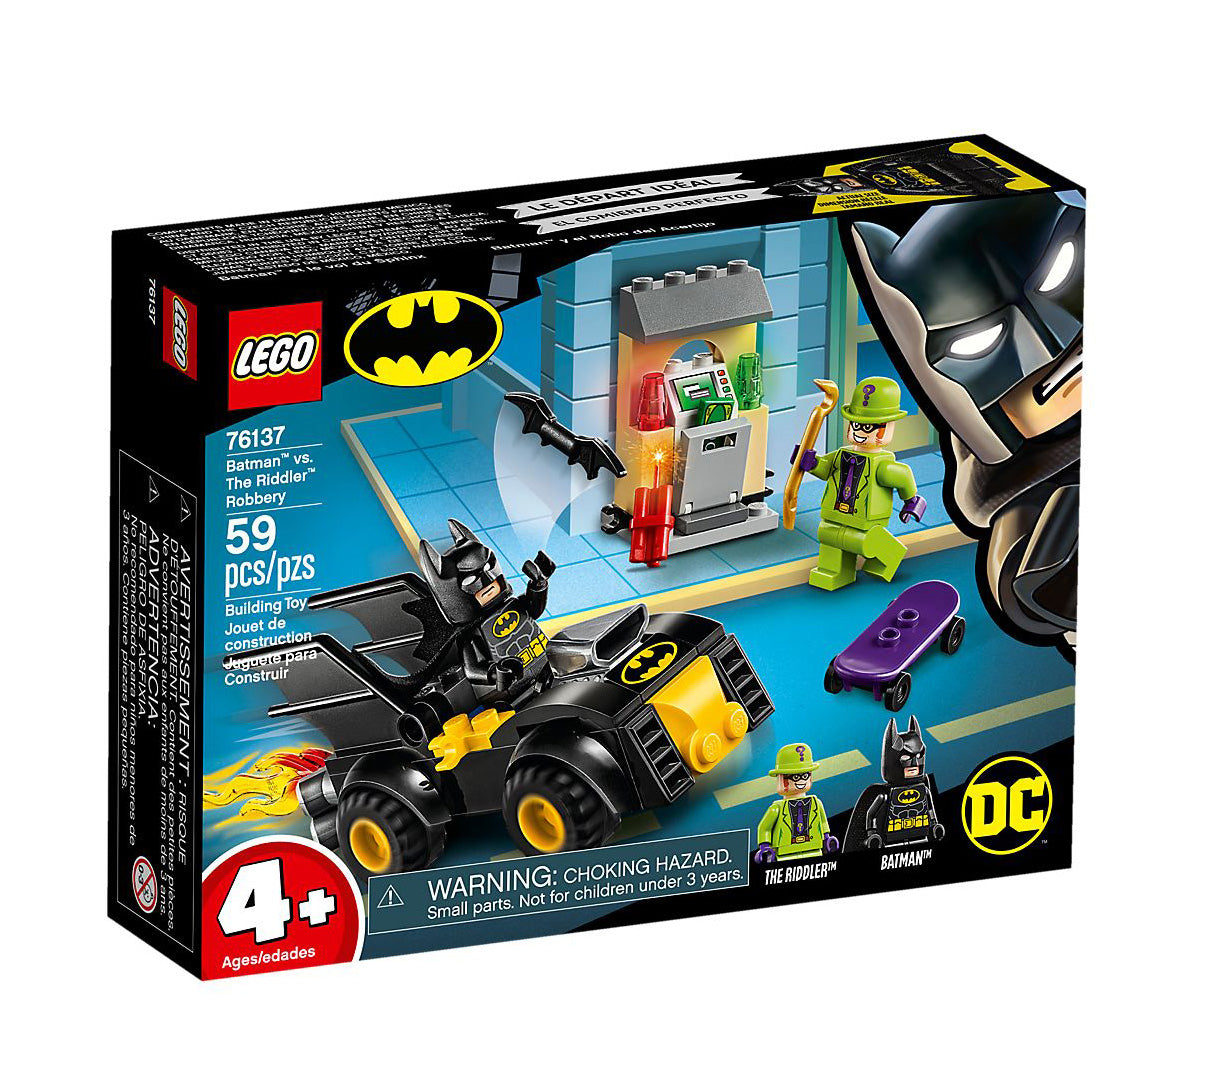 Lego DC Comics Super Heroes Batman vs The Riddler Robbery 76137